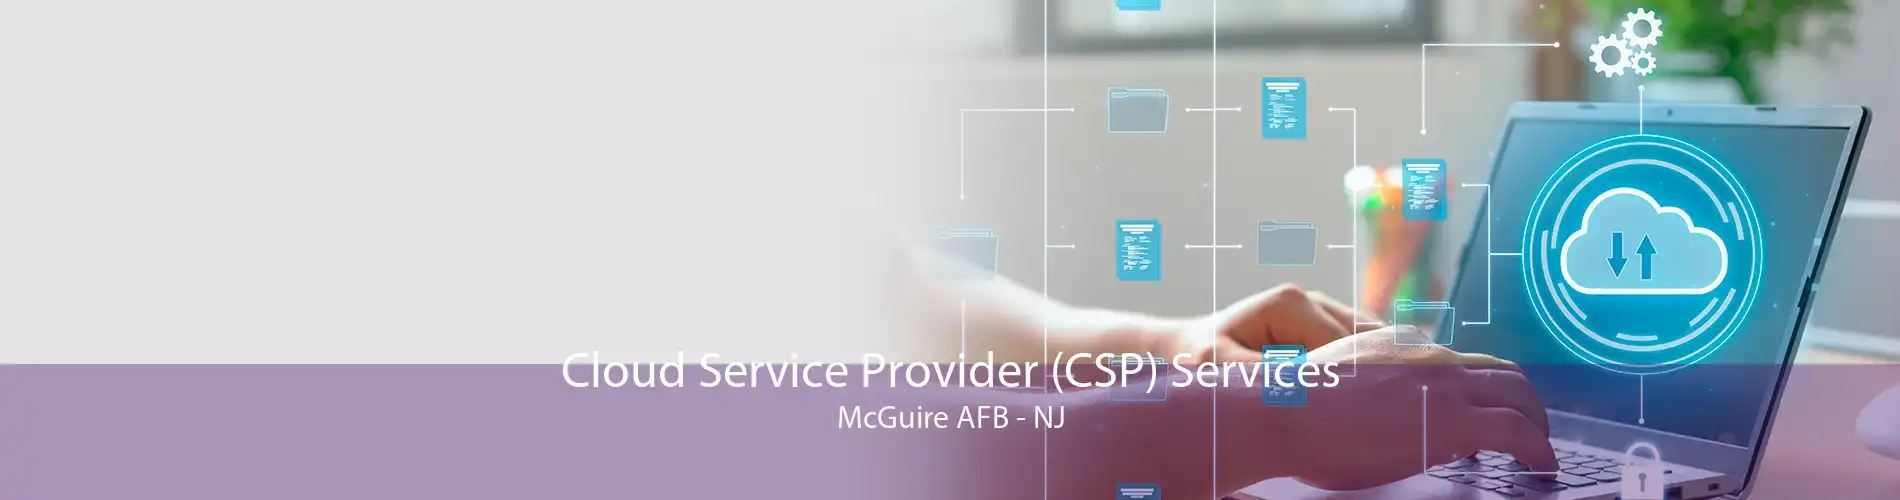 Cloud Service Provider (CSP) Services McGuire AFB - NJ